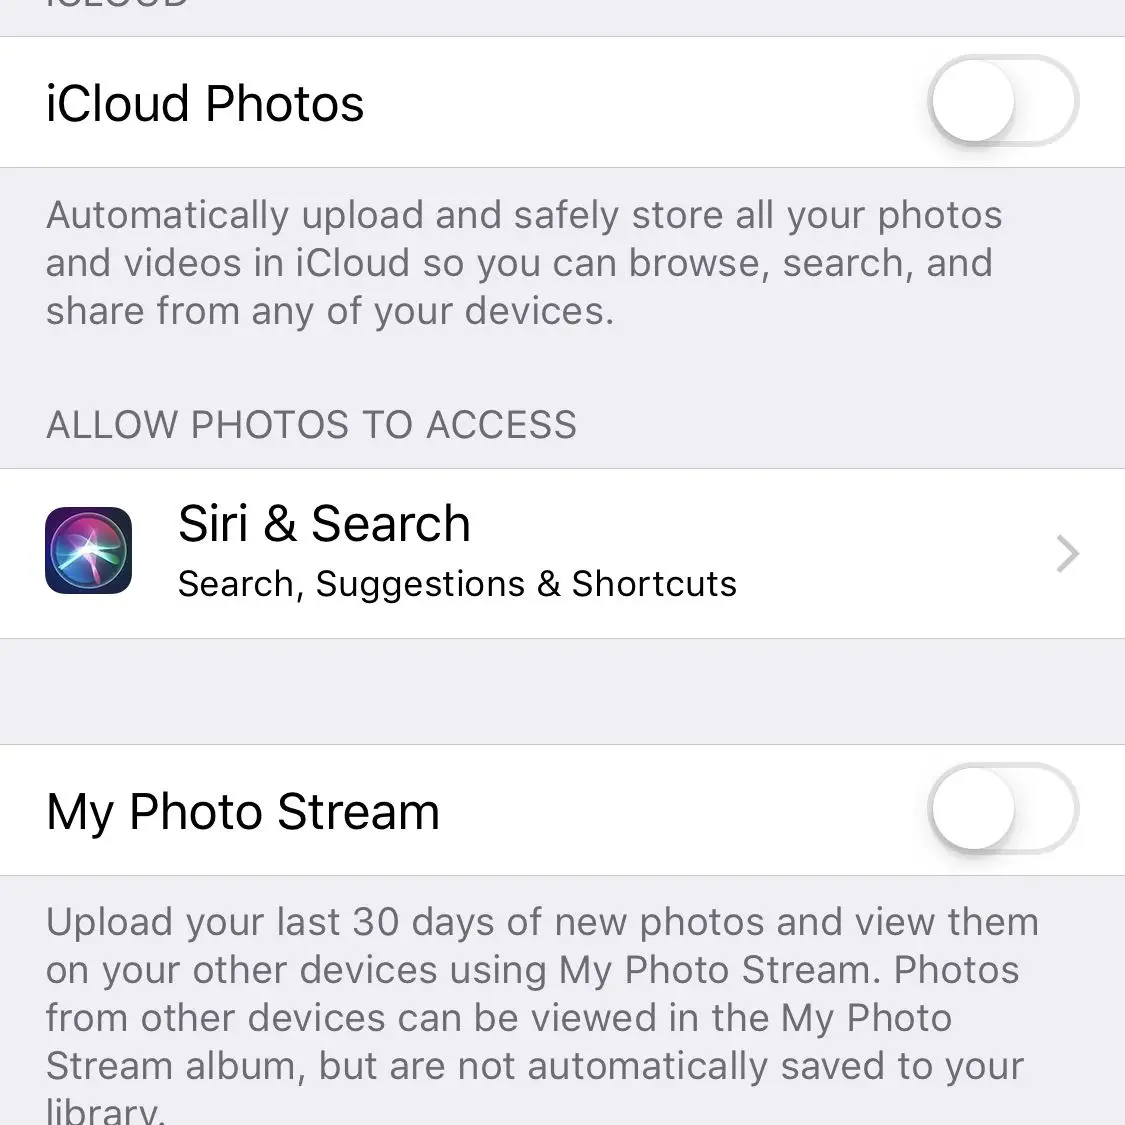 Tela de fotos iCloud no dispositivo iOS